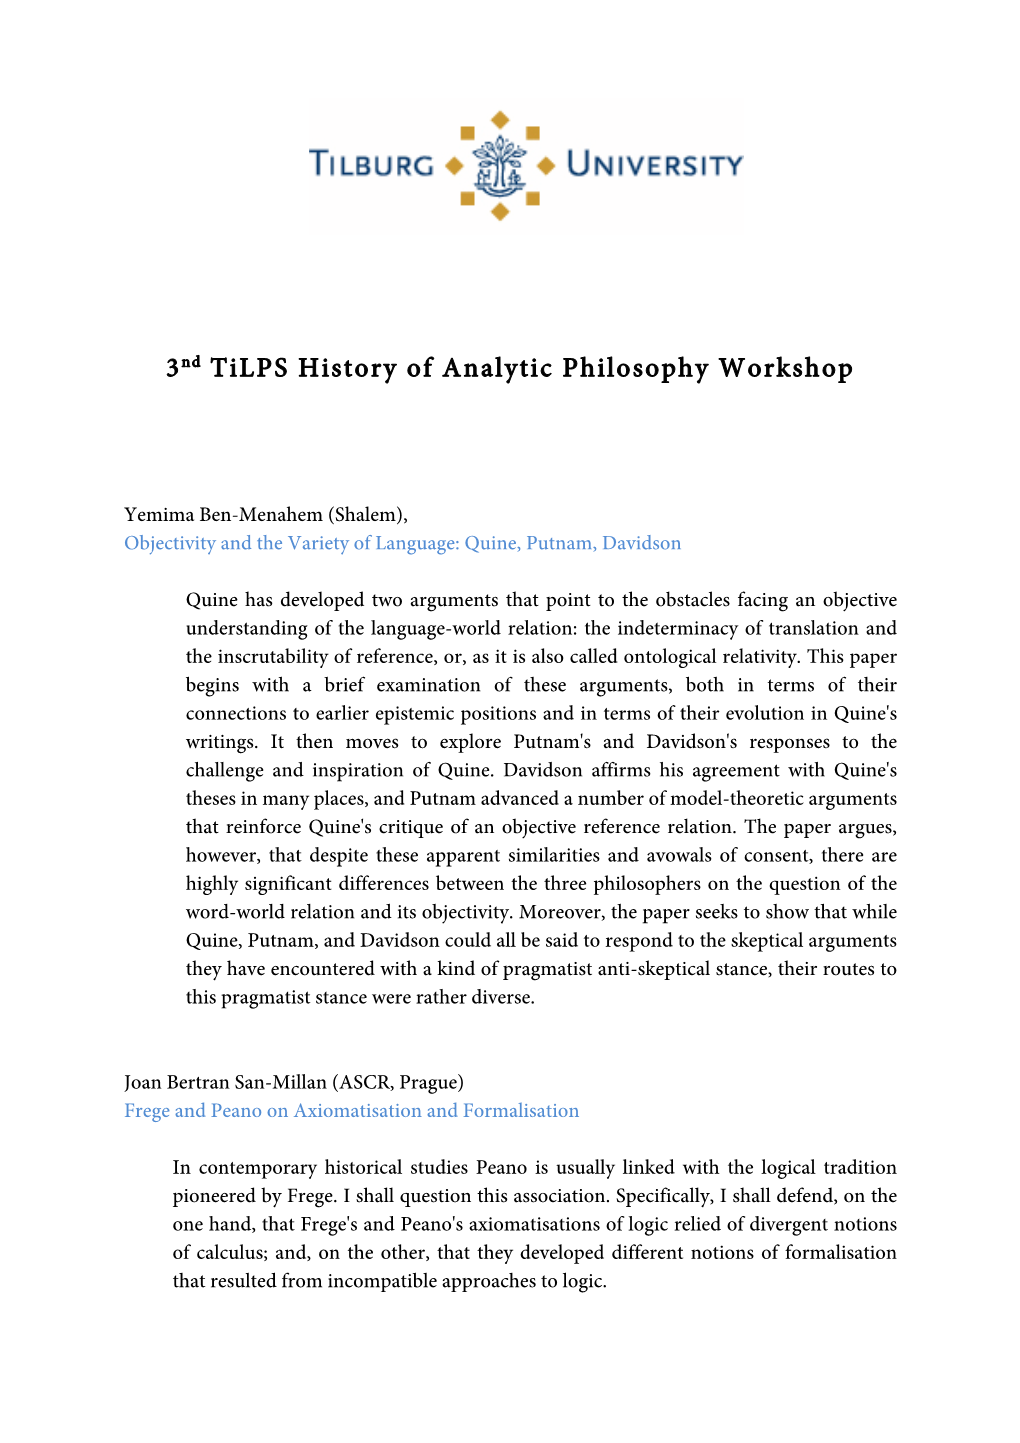 3Nd Tilps History of Analytic Philosophy Workshop